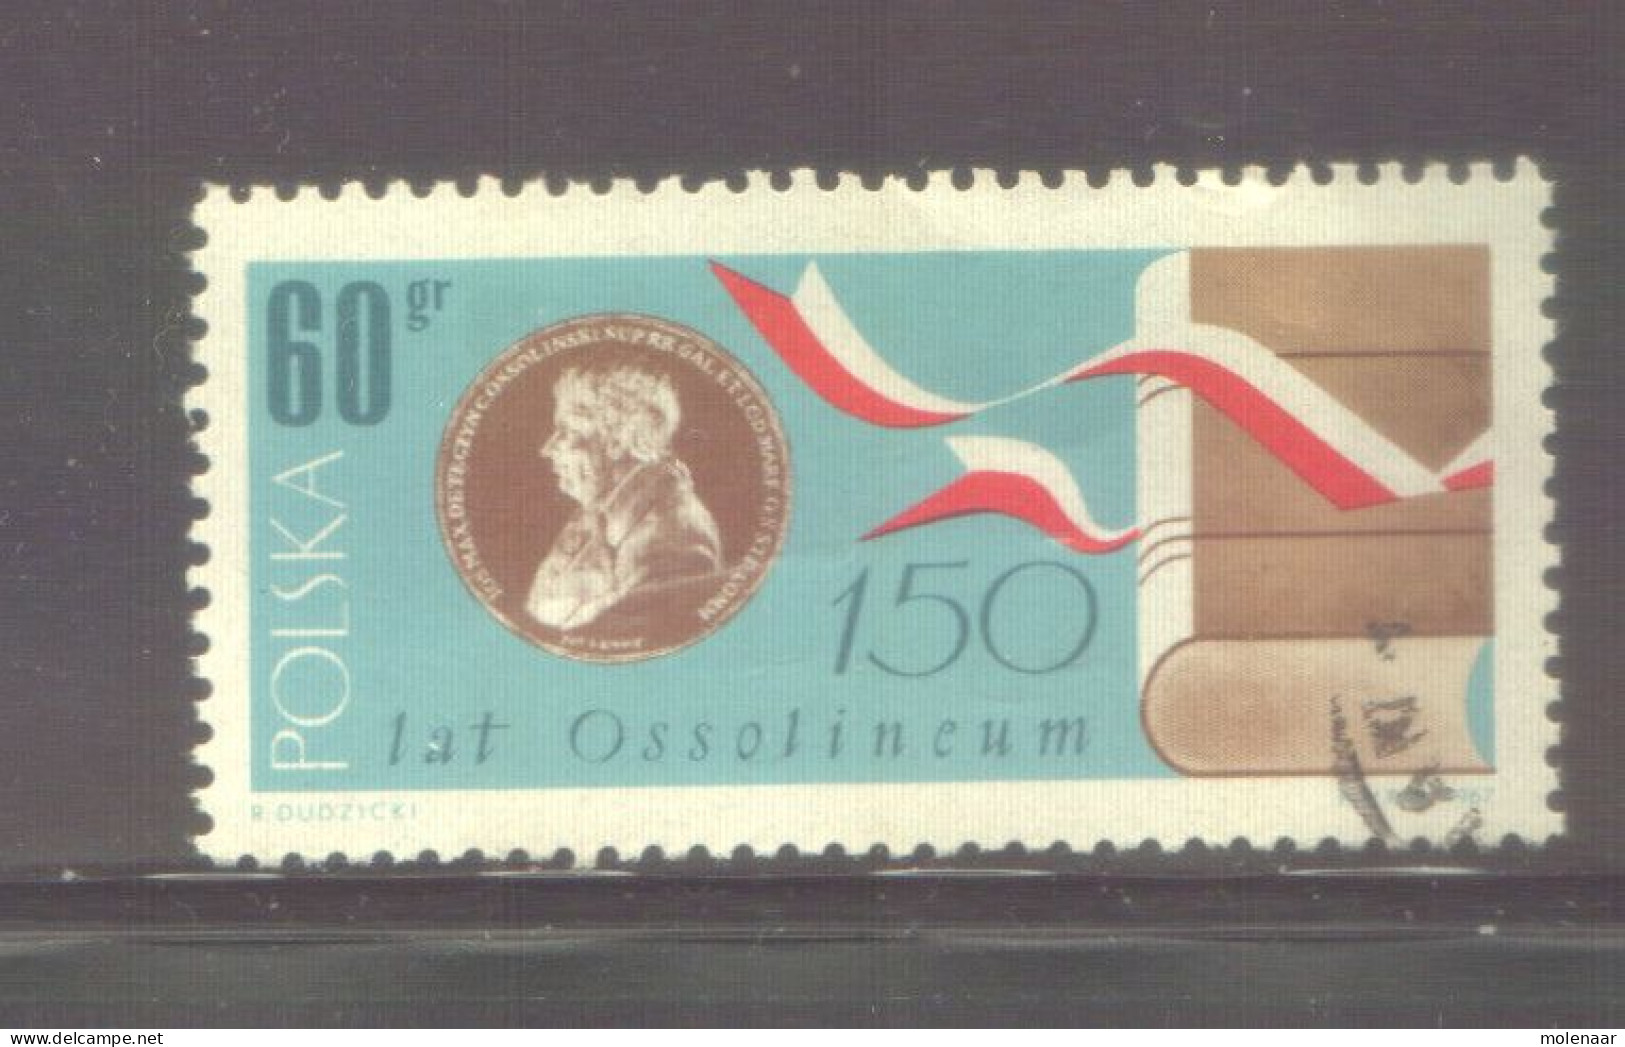 Postzegels > Europa > Polen > 1944-.... Republiek > 1961-70 > Gebruikt No. 1811 (12008) - Gebraucht